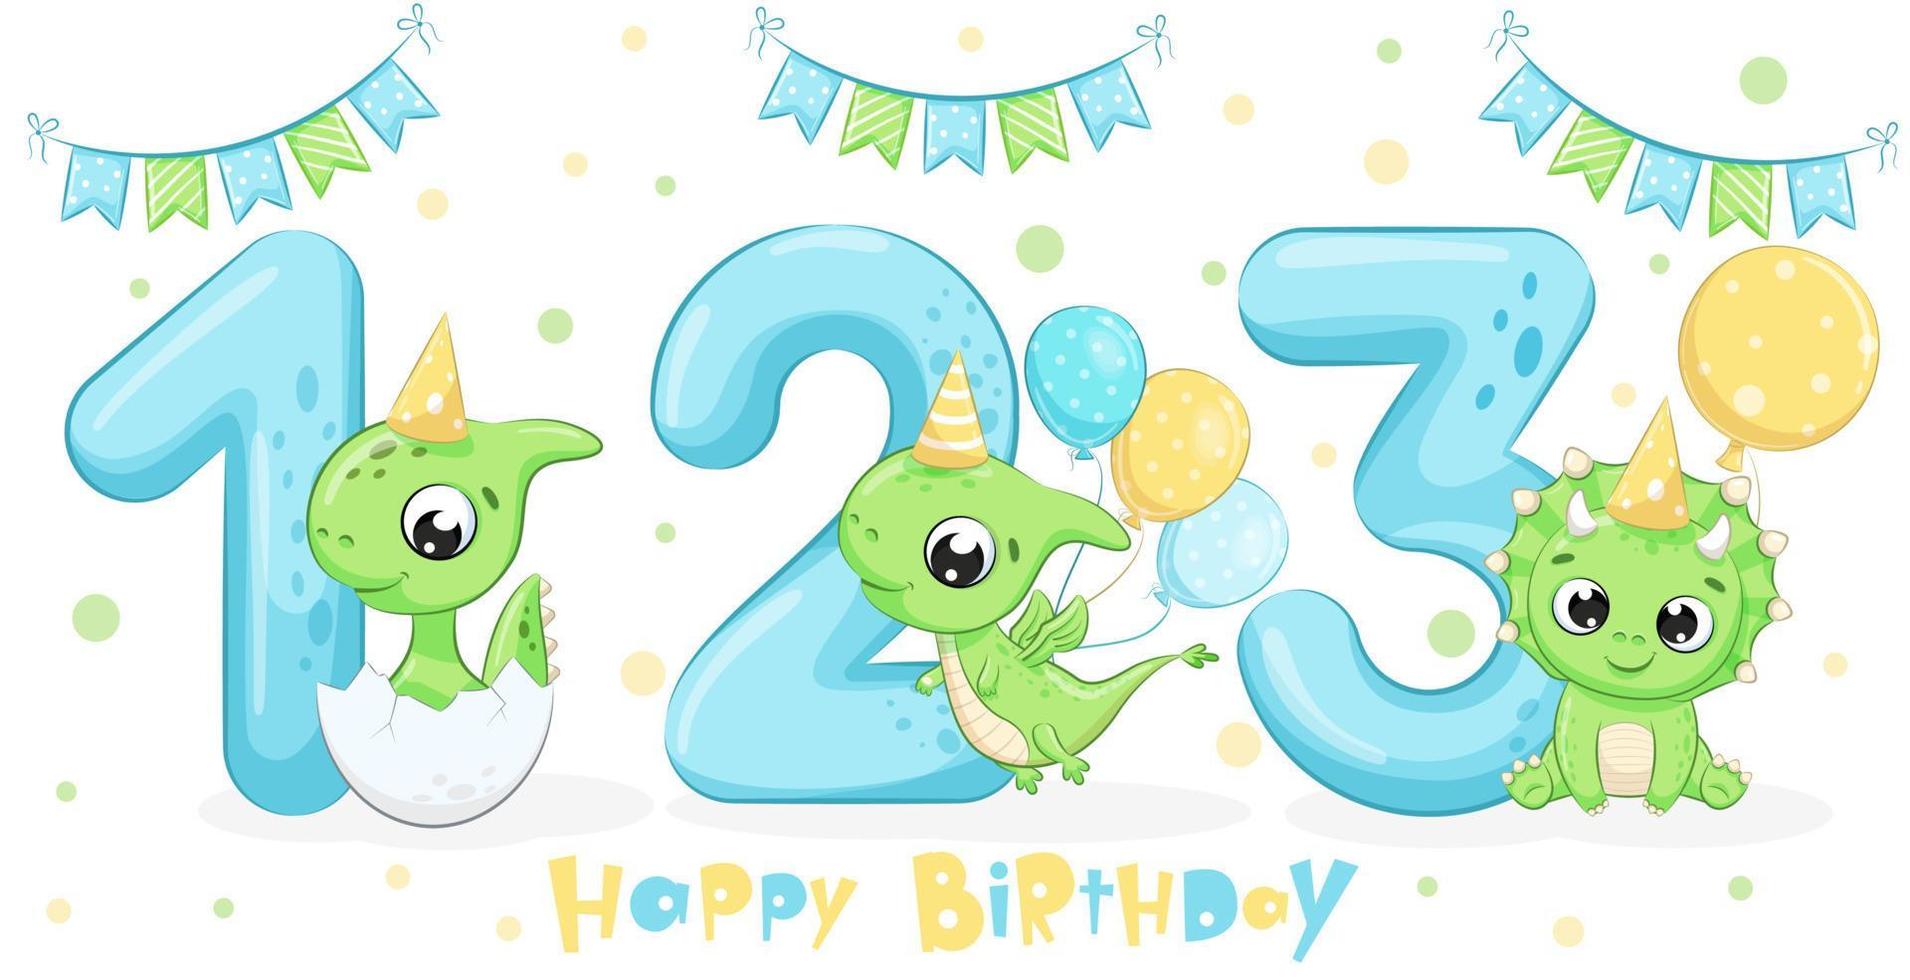 Set of 3 cute green dinosaurs - Happy birthday, 1,2,3 years. Vector illustration of a cartoon.